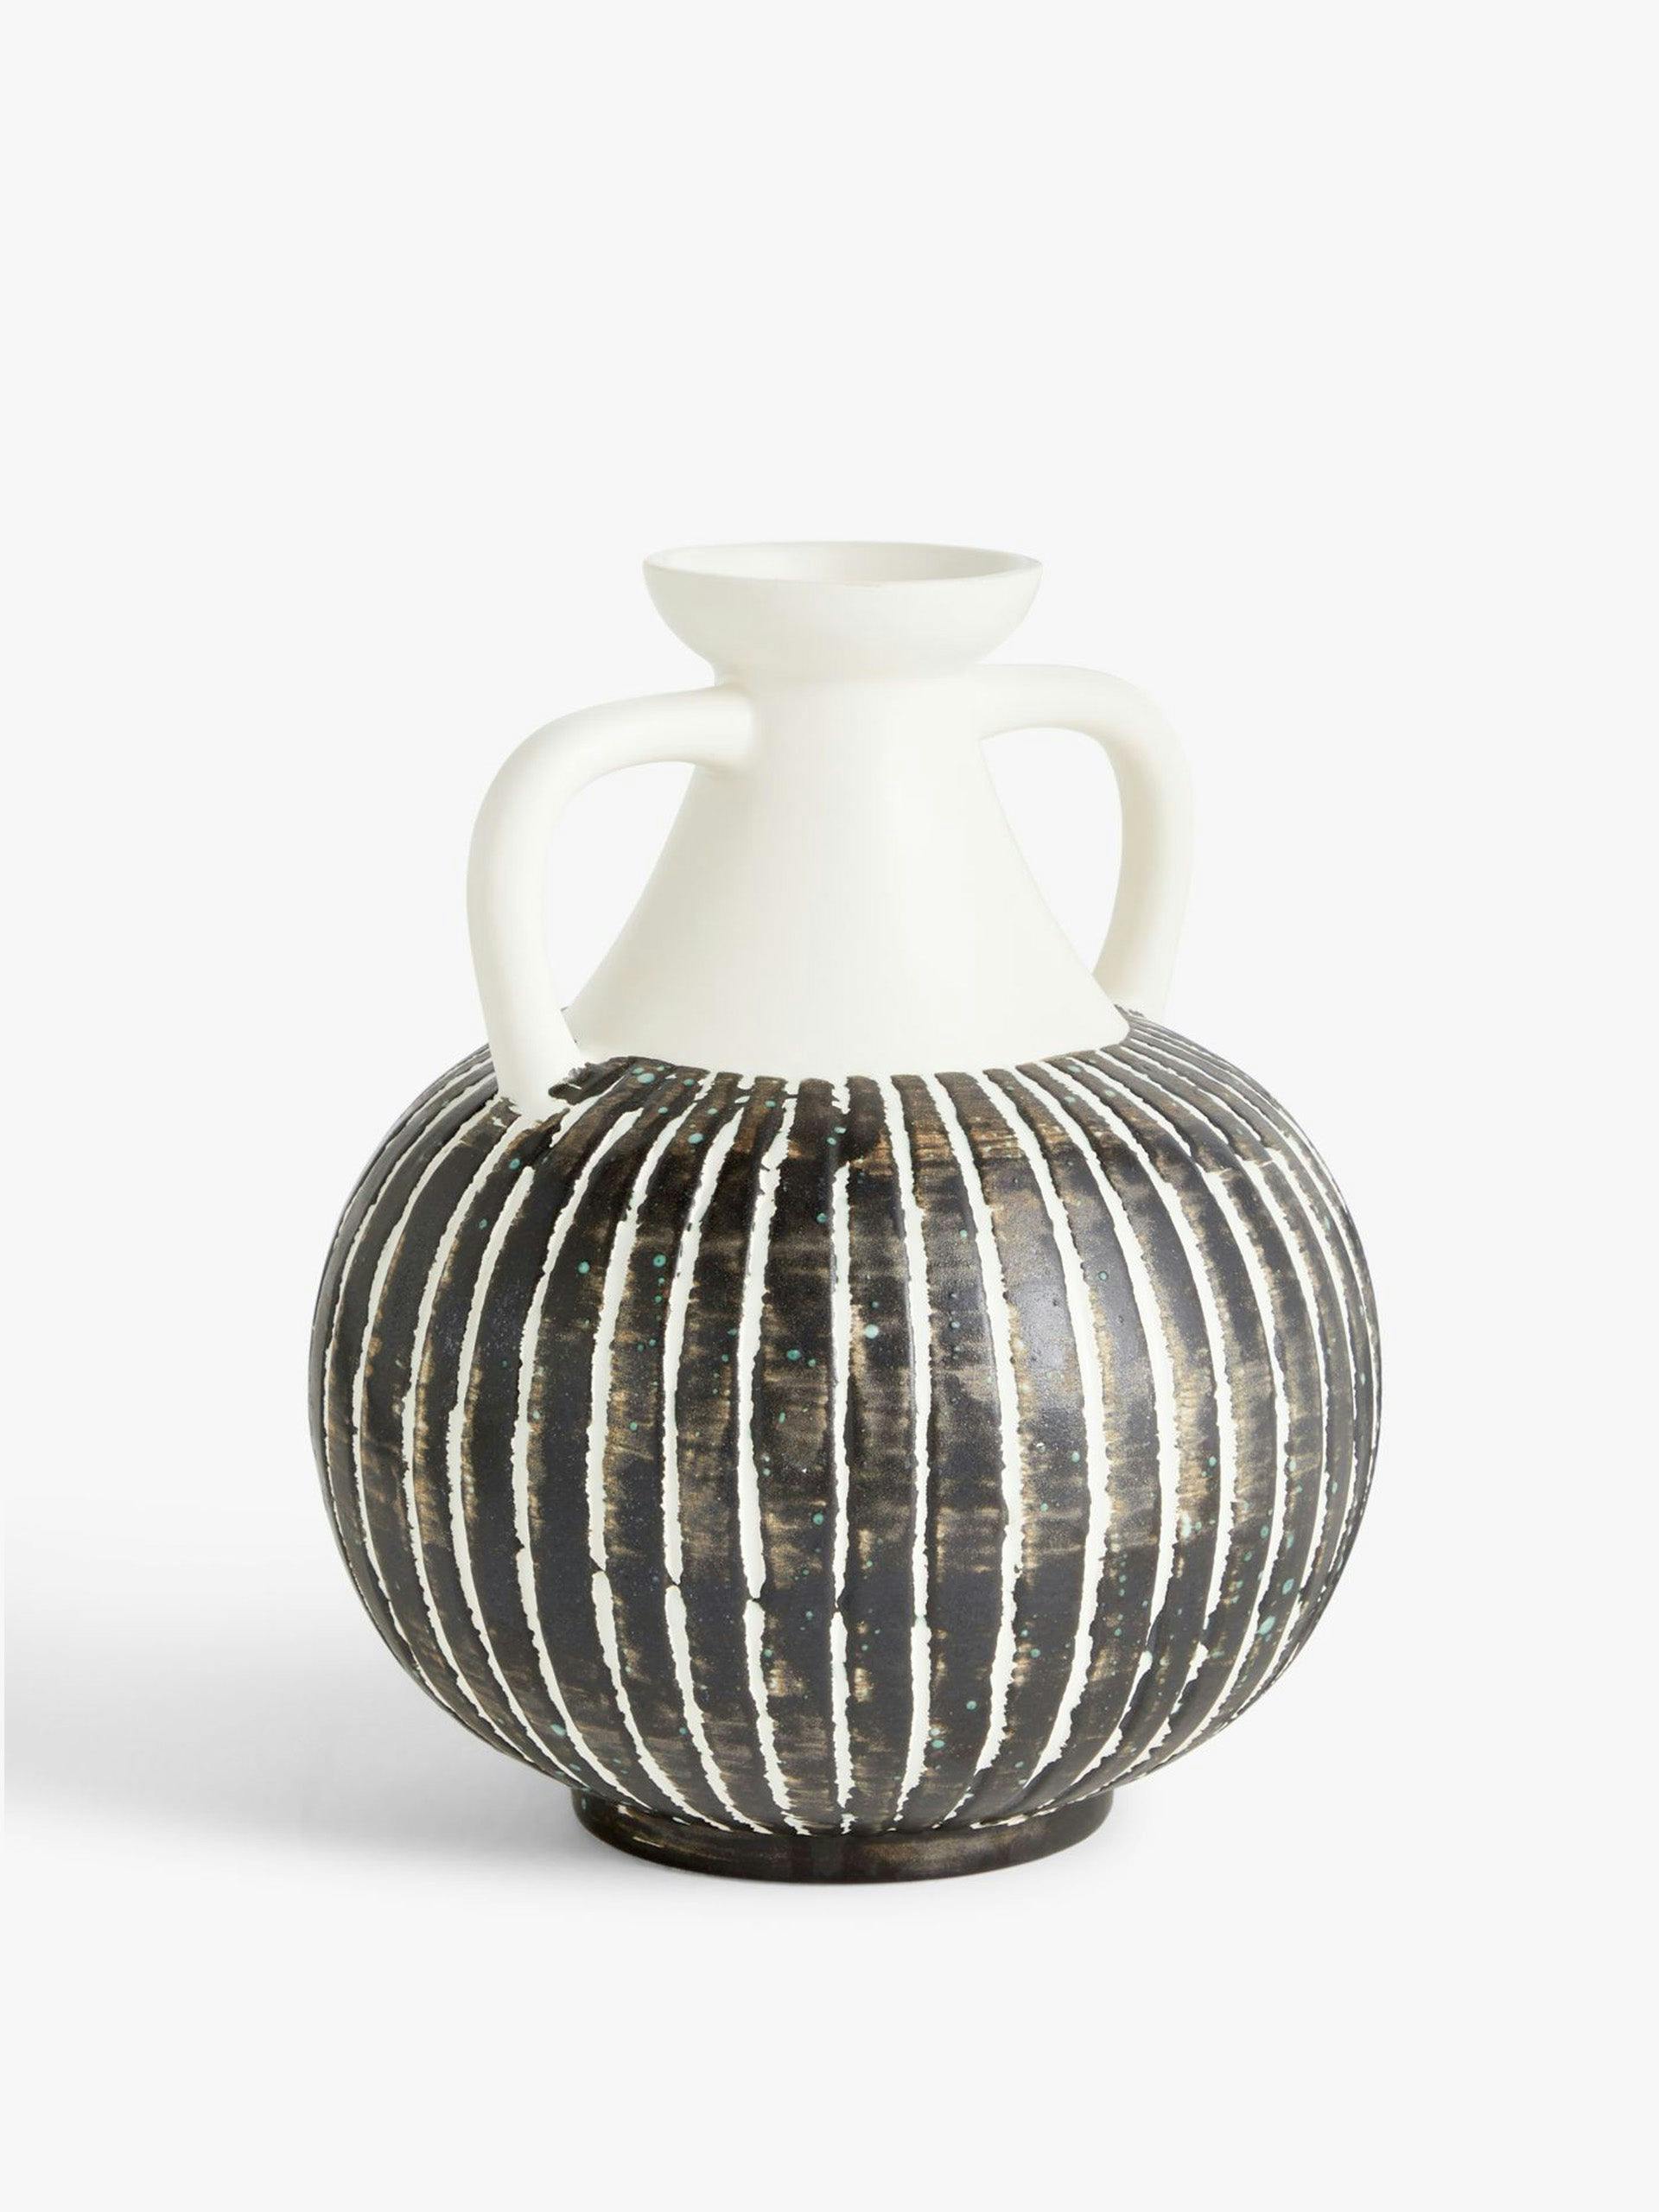 Striped ceramic vase with handles